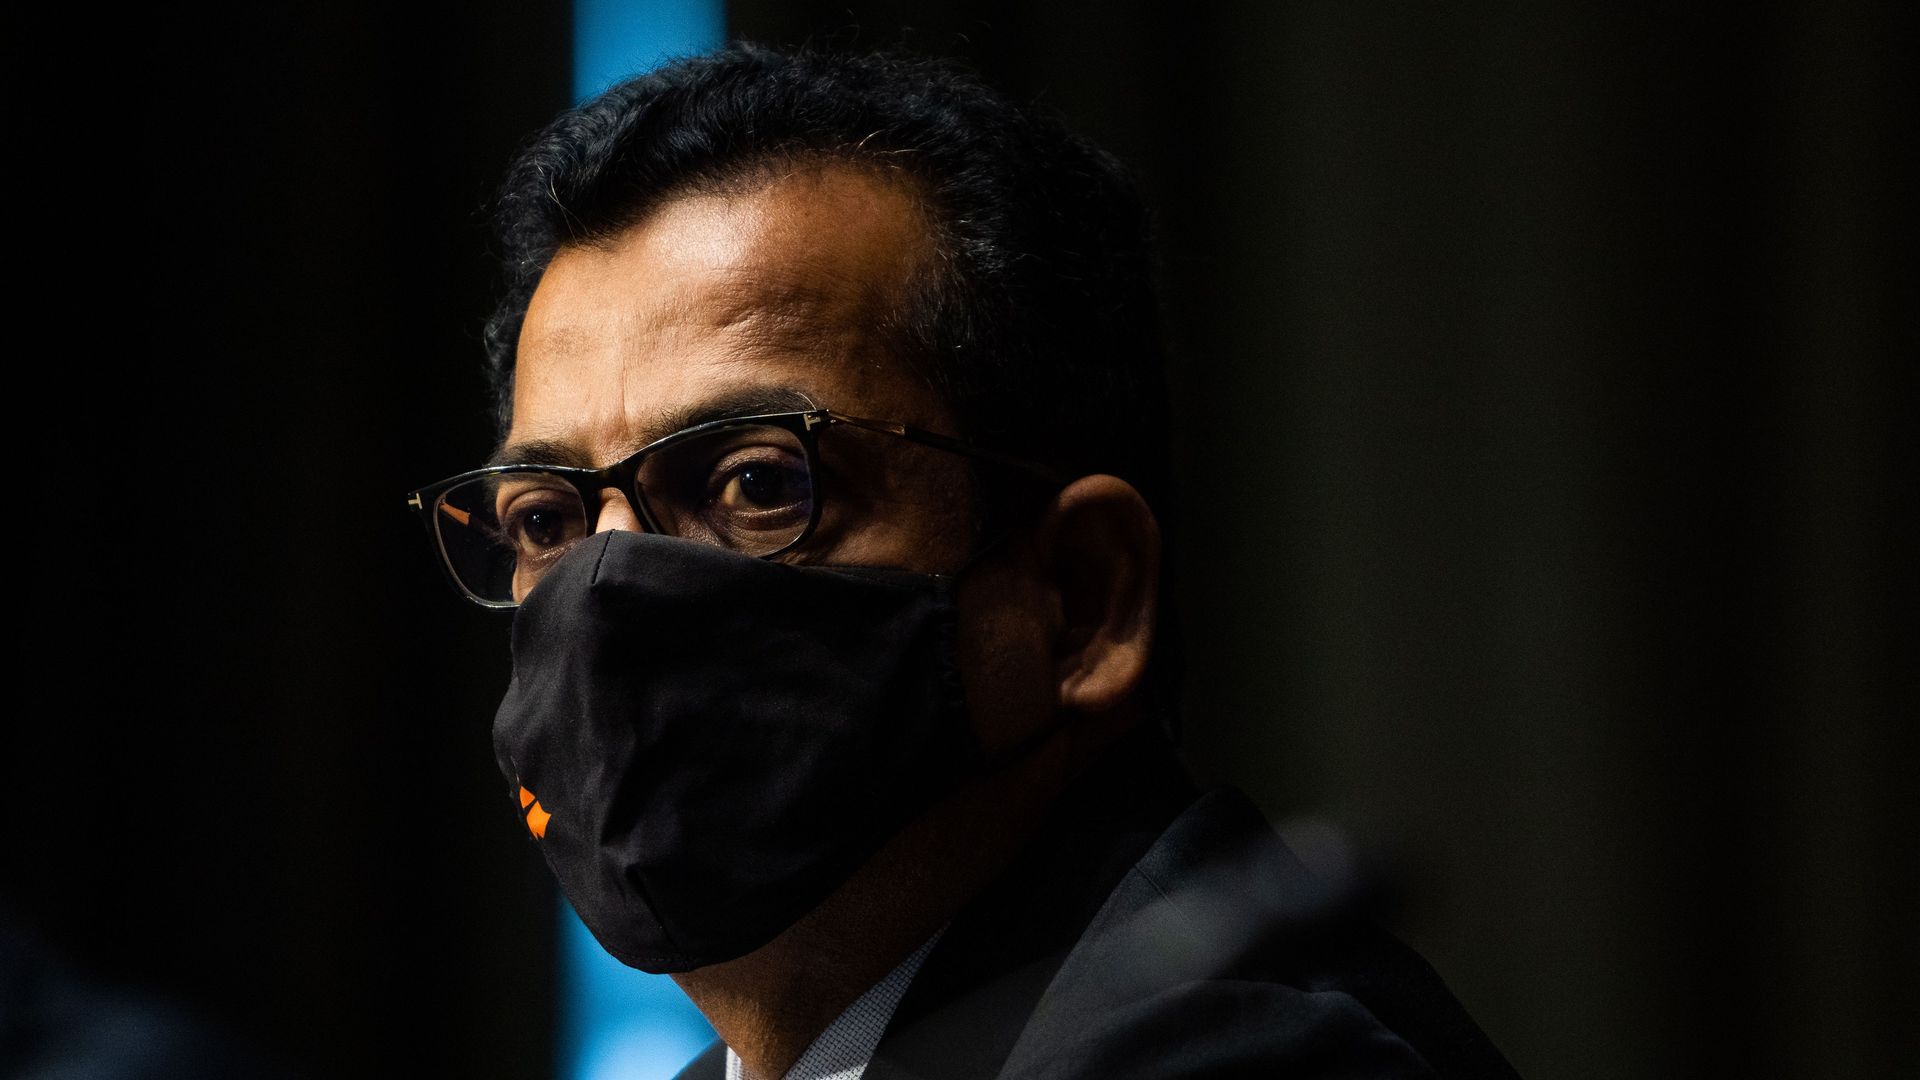 Picture of SolarWinds CEO Sudhakar Ramakrishna wearing a black mask